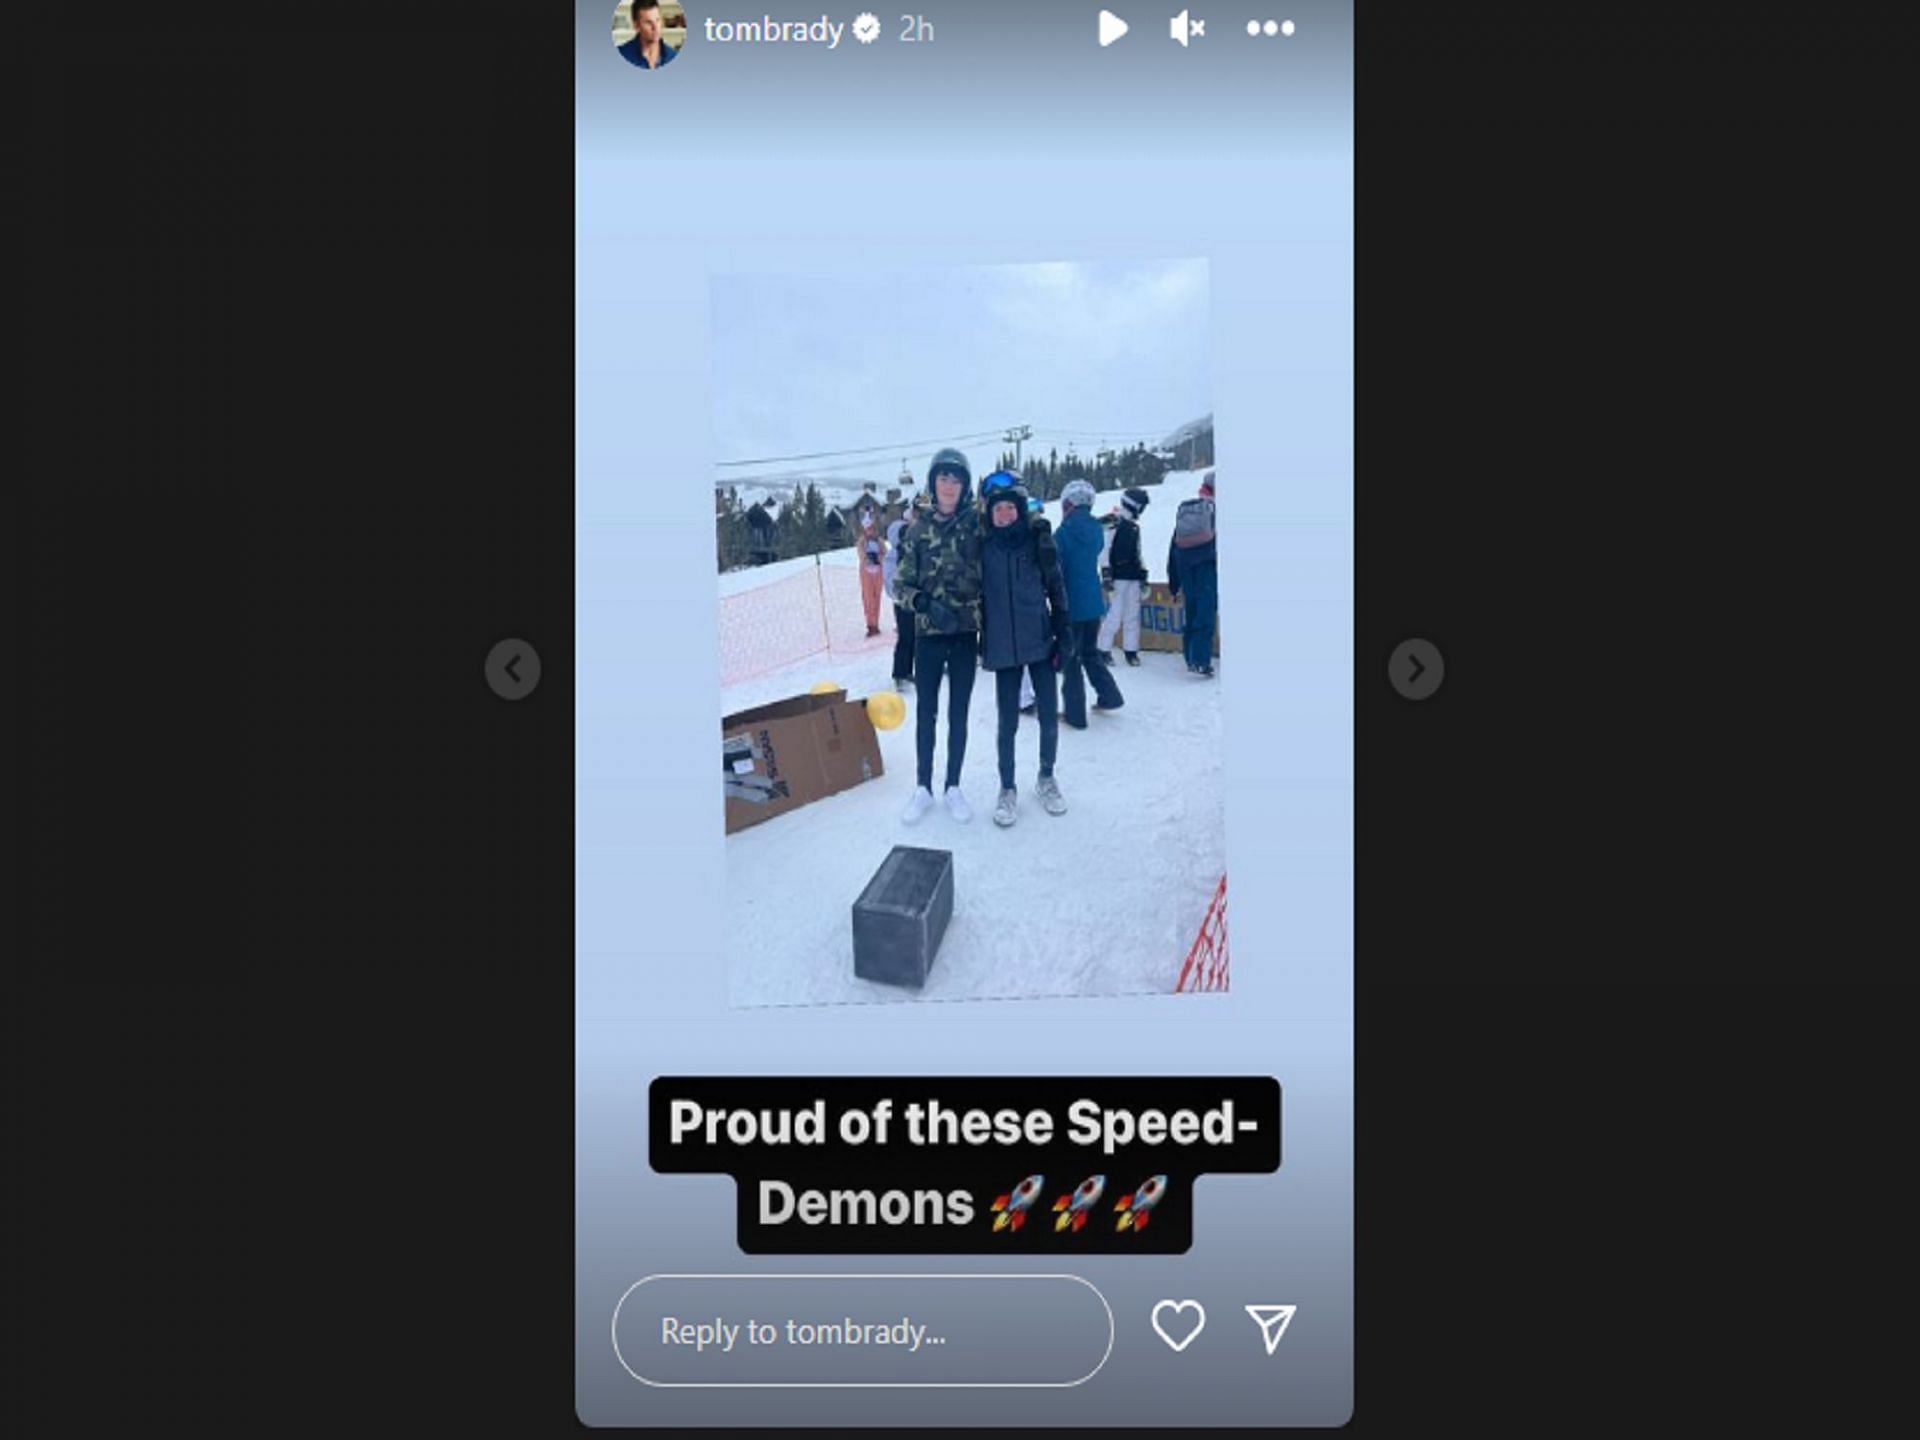 No. 12 reveals new nickname for kids on ski trip - Courtesy of QB on Instagram